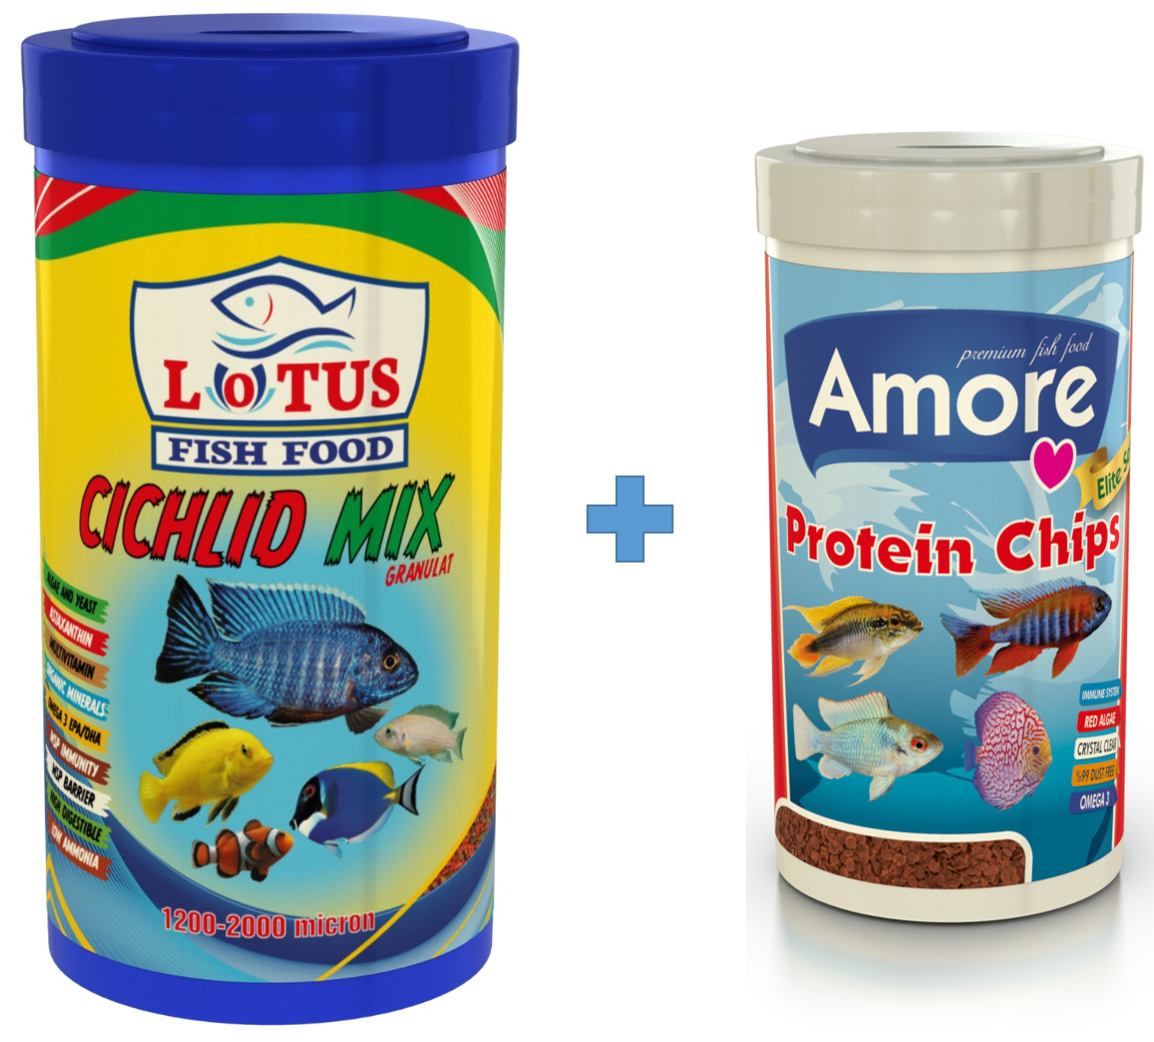 Lotus Cichlid Mix 1000ml Ve Amore Elite Protein Chips Pro Algae 250ml Akvaryum Balık Yemi